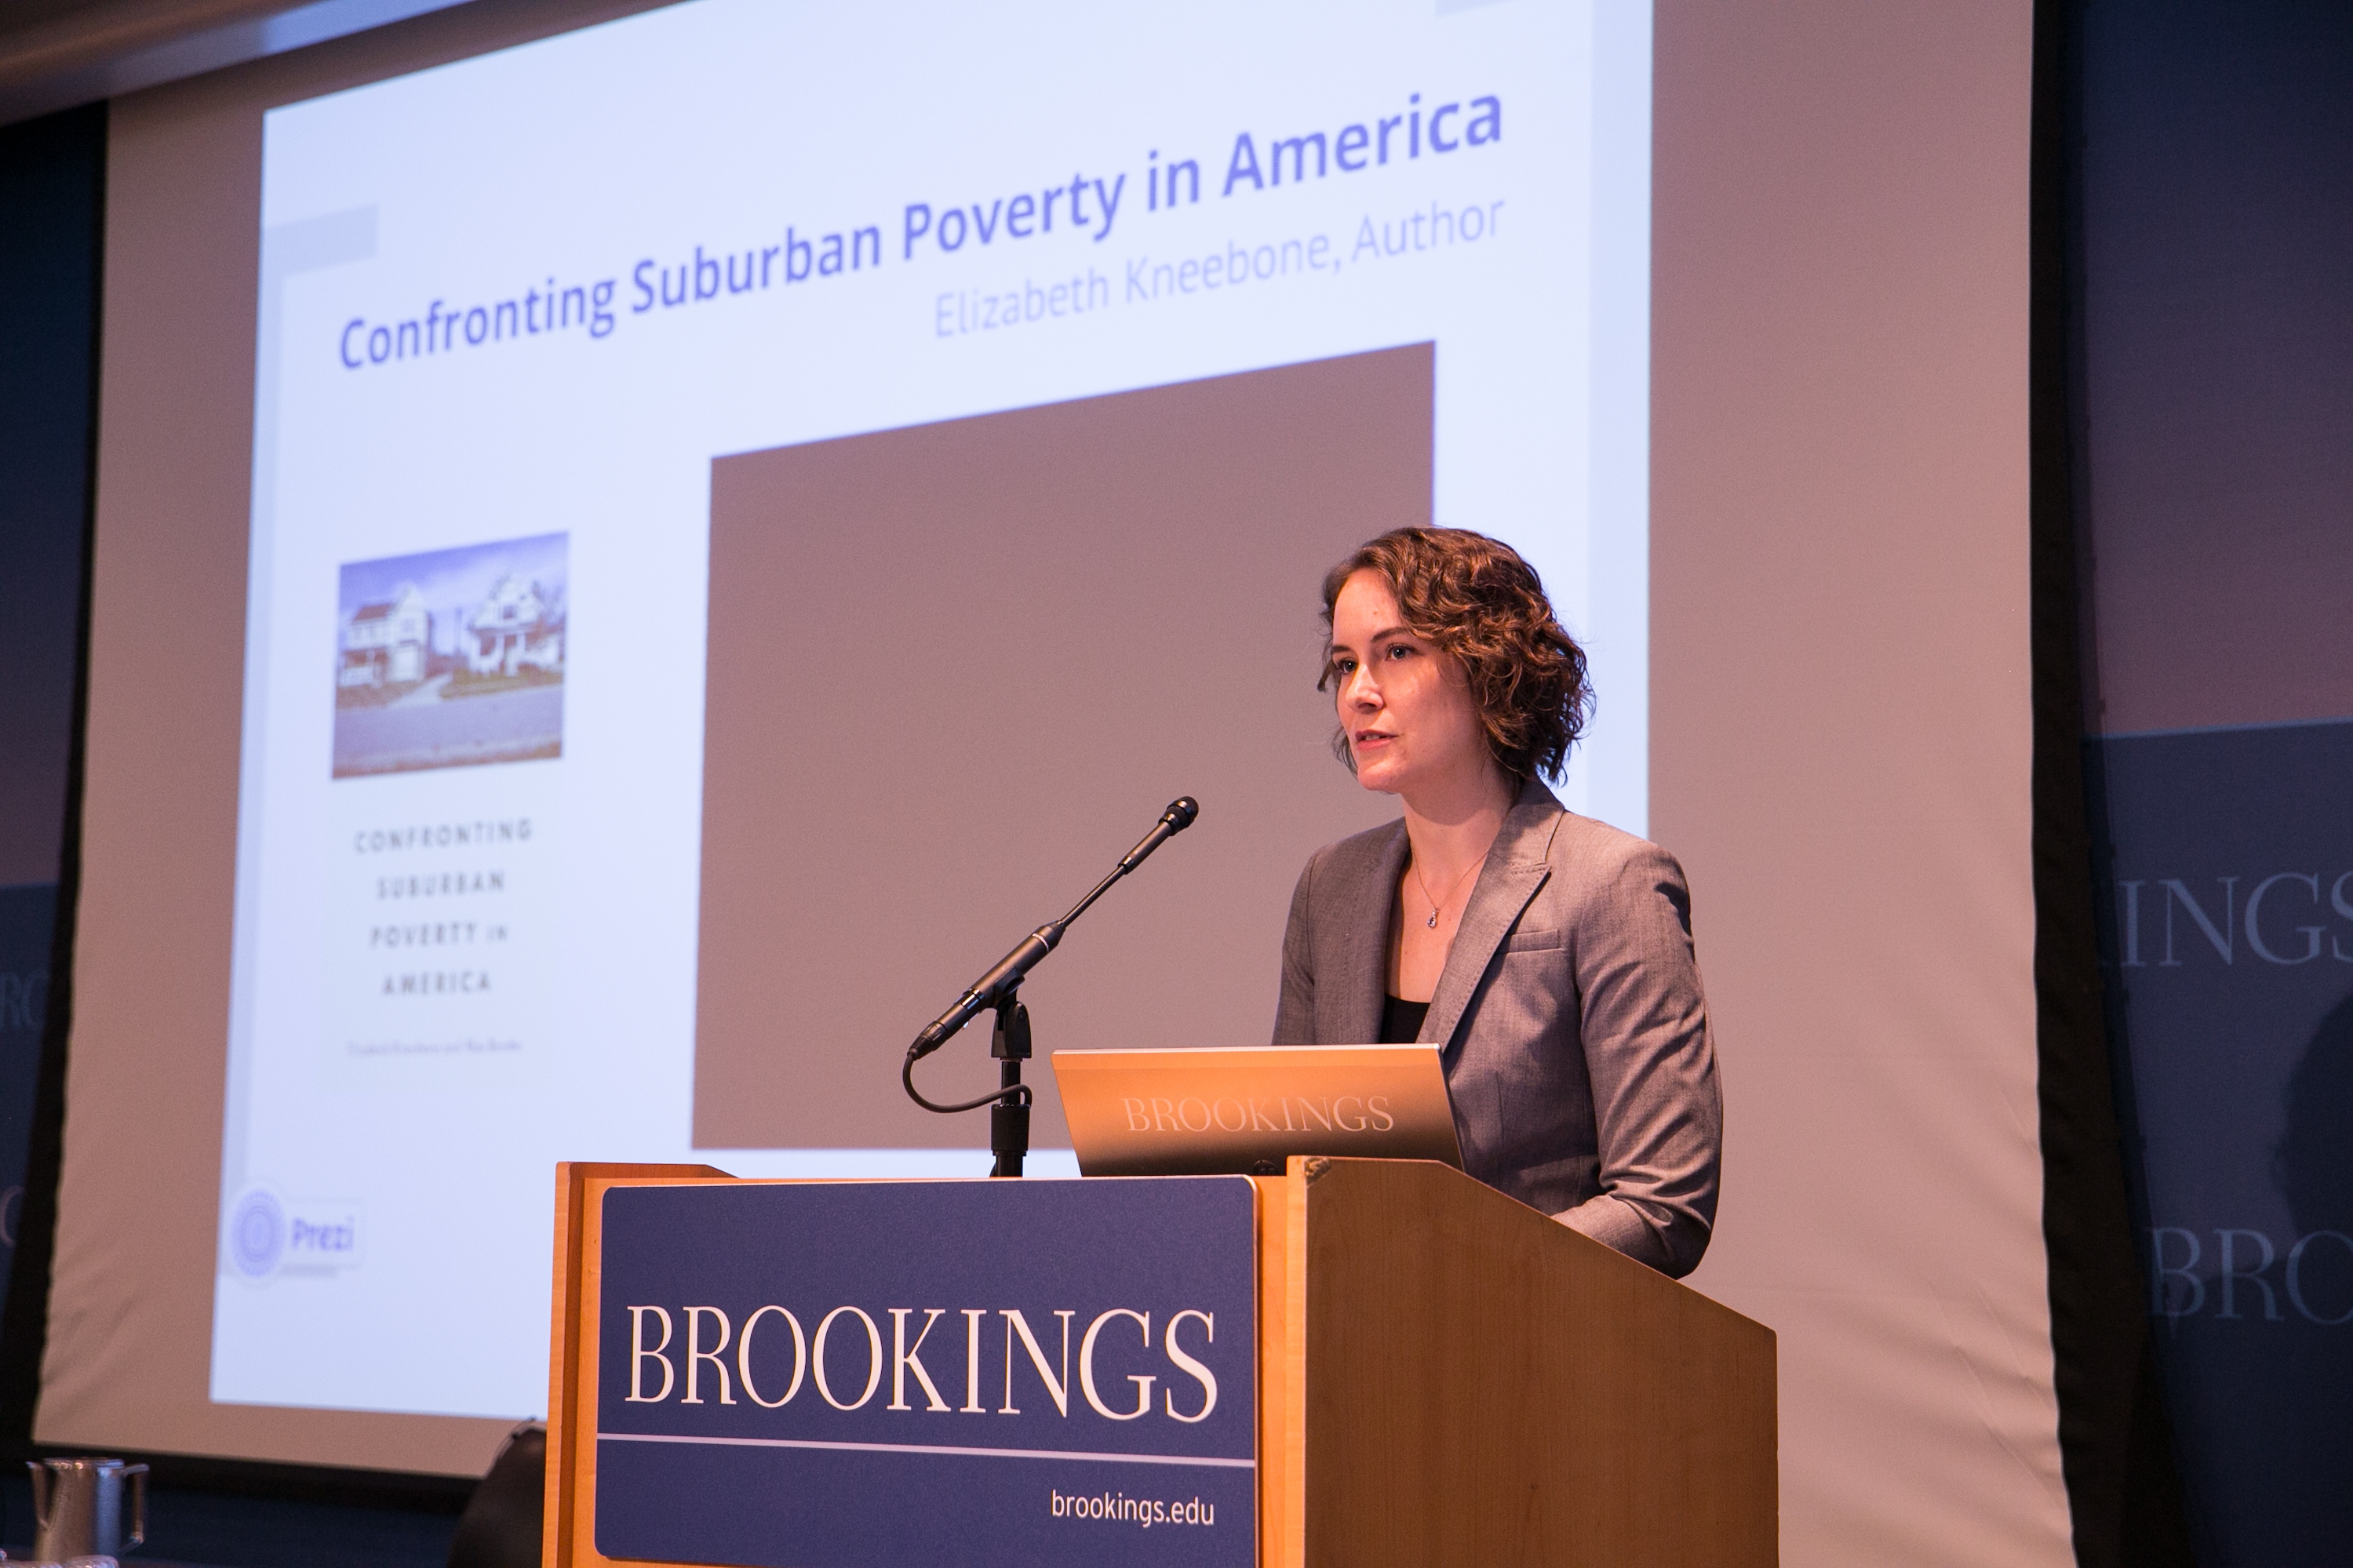 Elizabeth Kneebone, Fellow, Metropolitan Policy Program and Author, Confronting Suburban Poverty in America